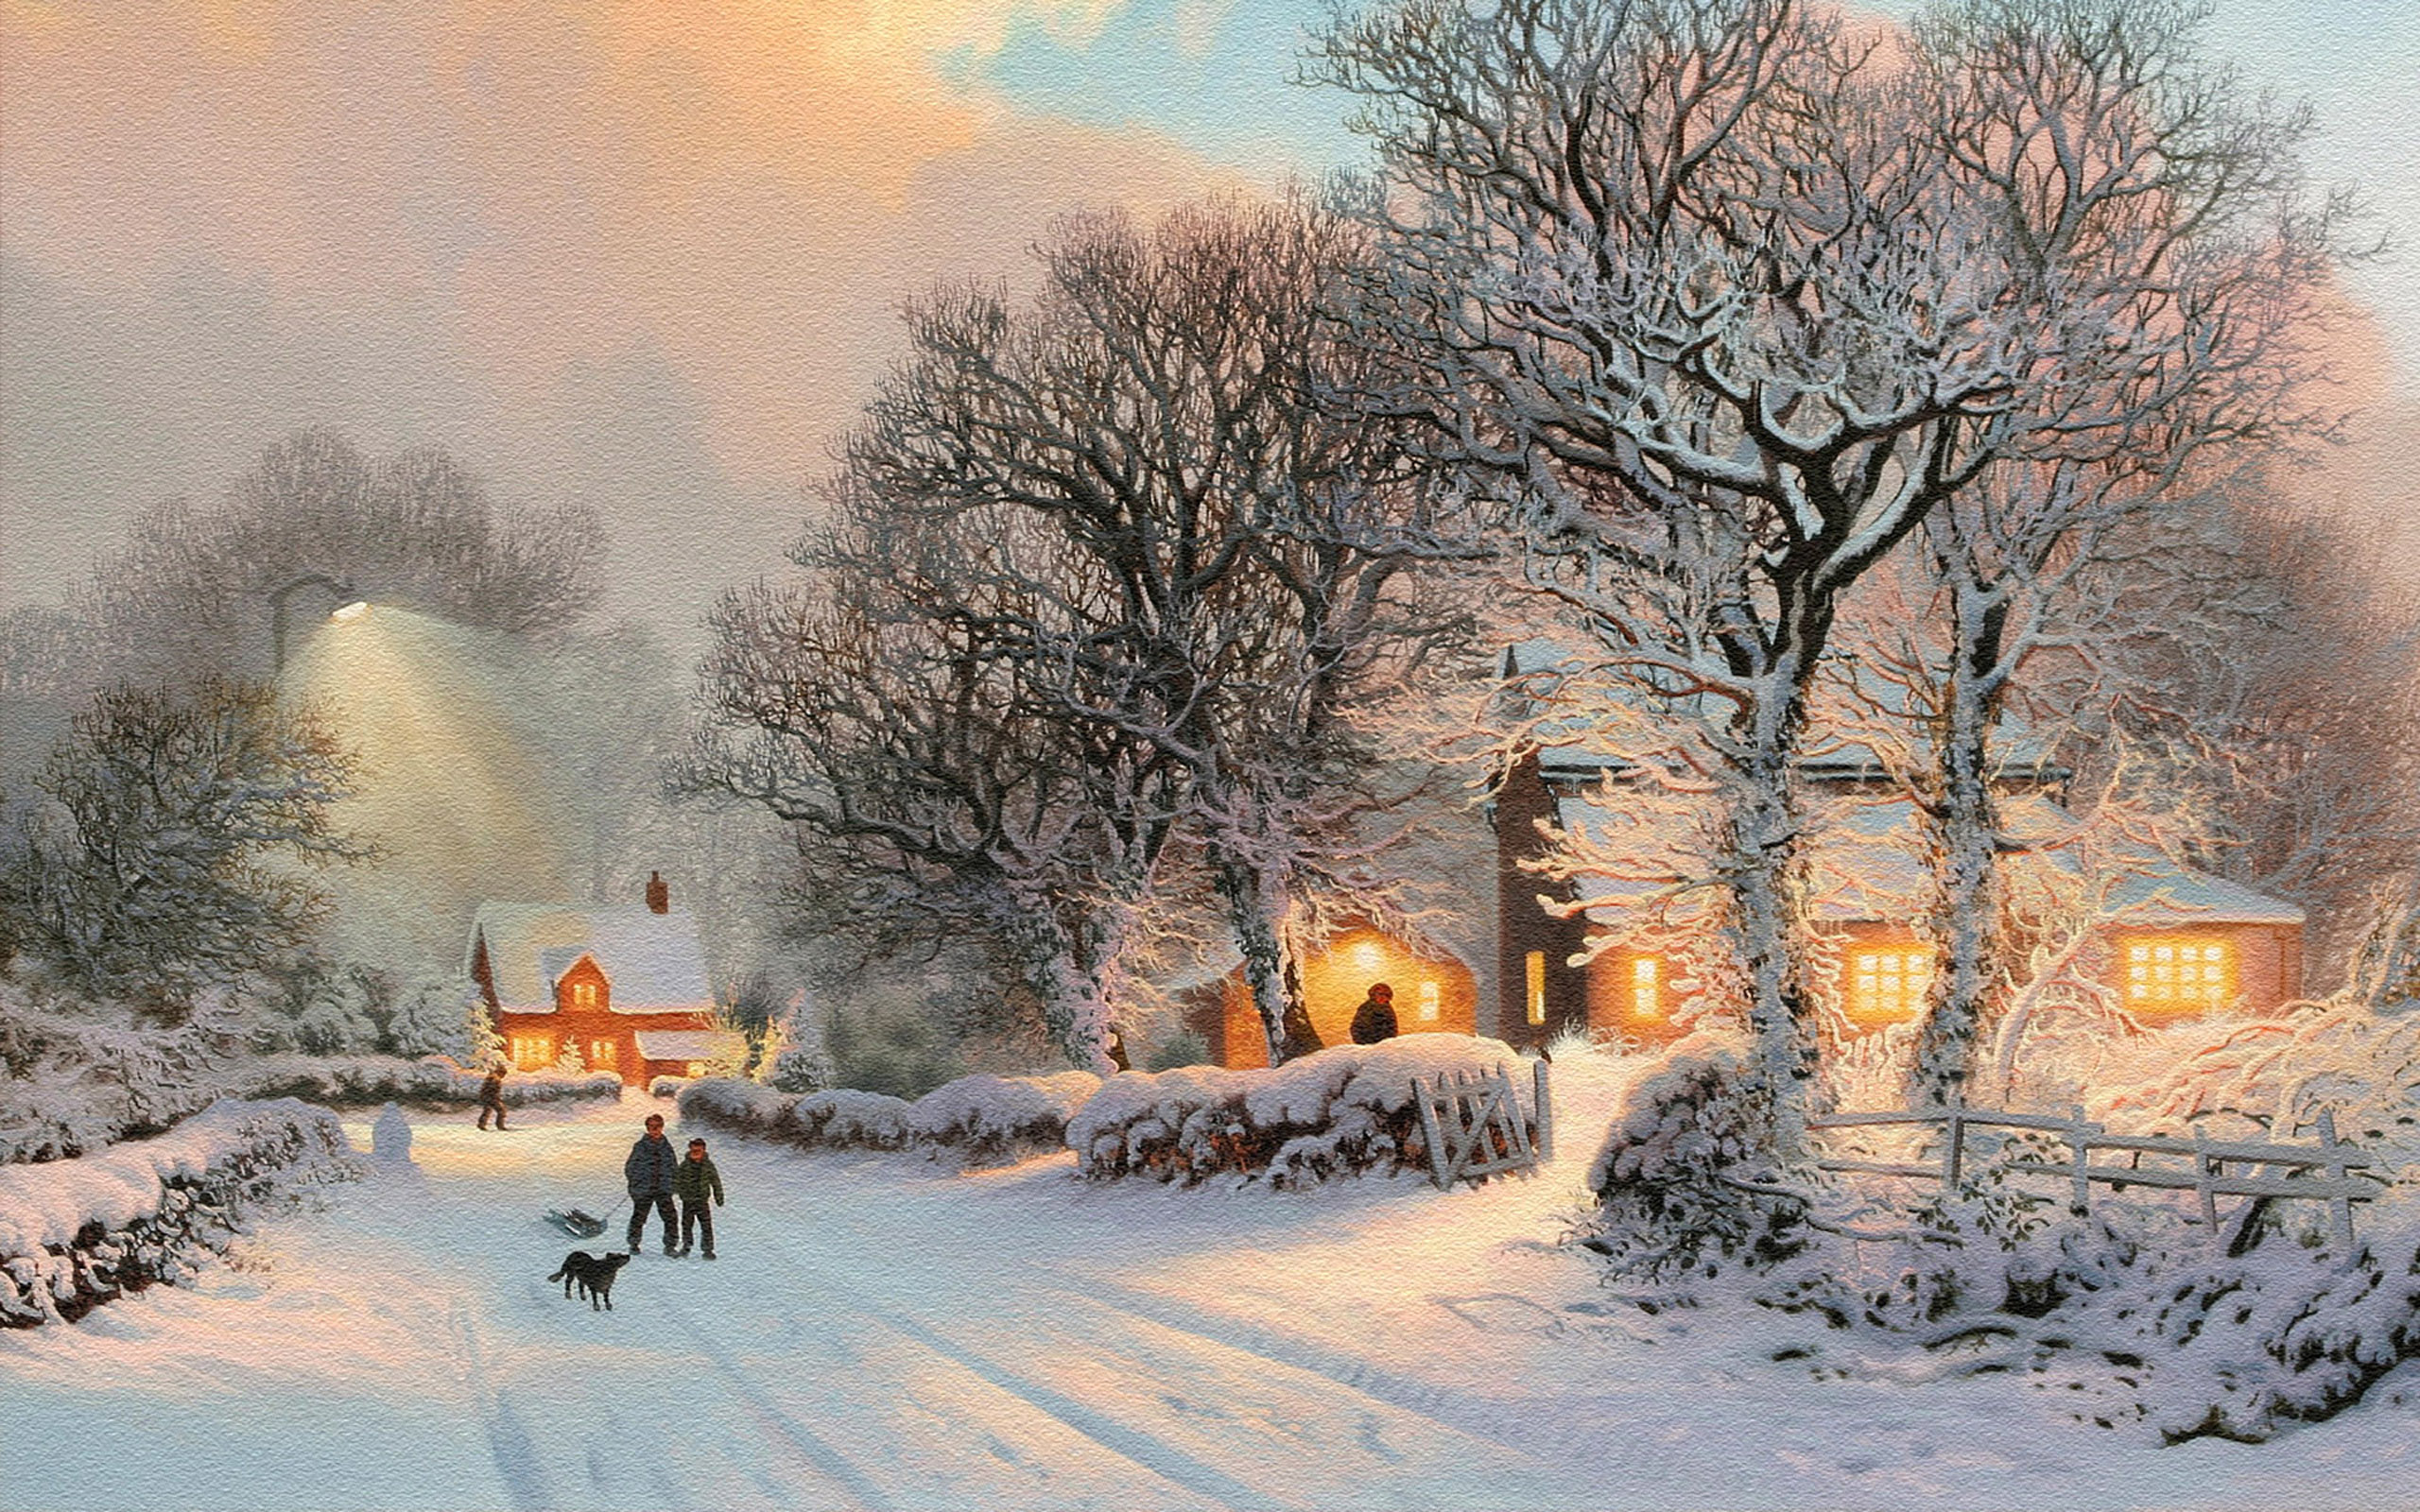 Hqwallbase Snow Winter Scene Wallpaper